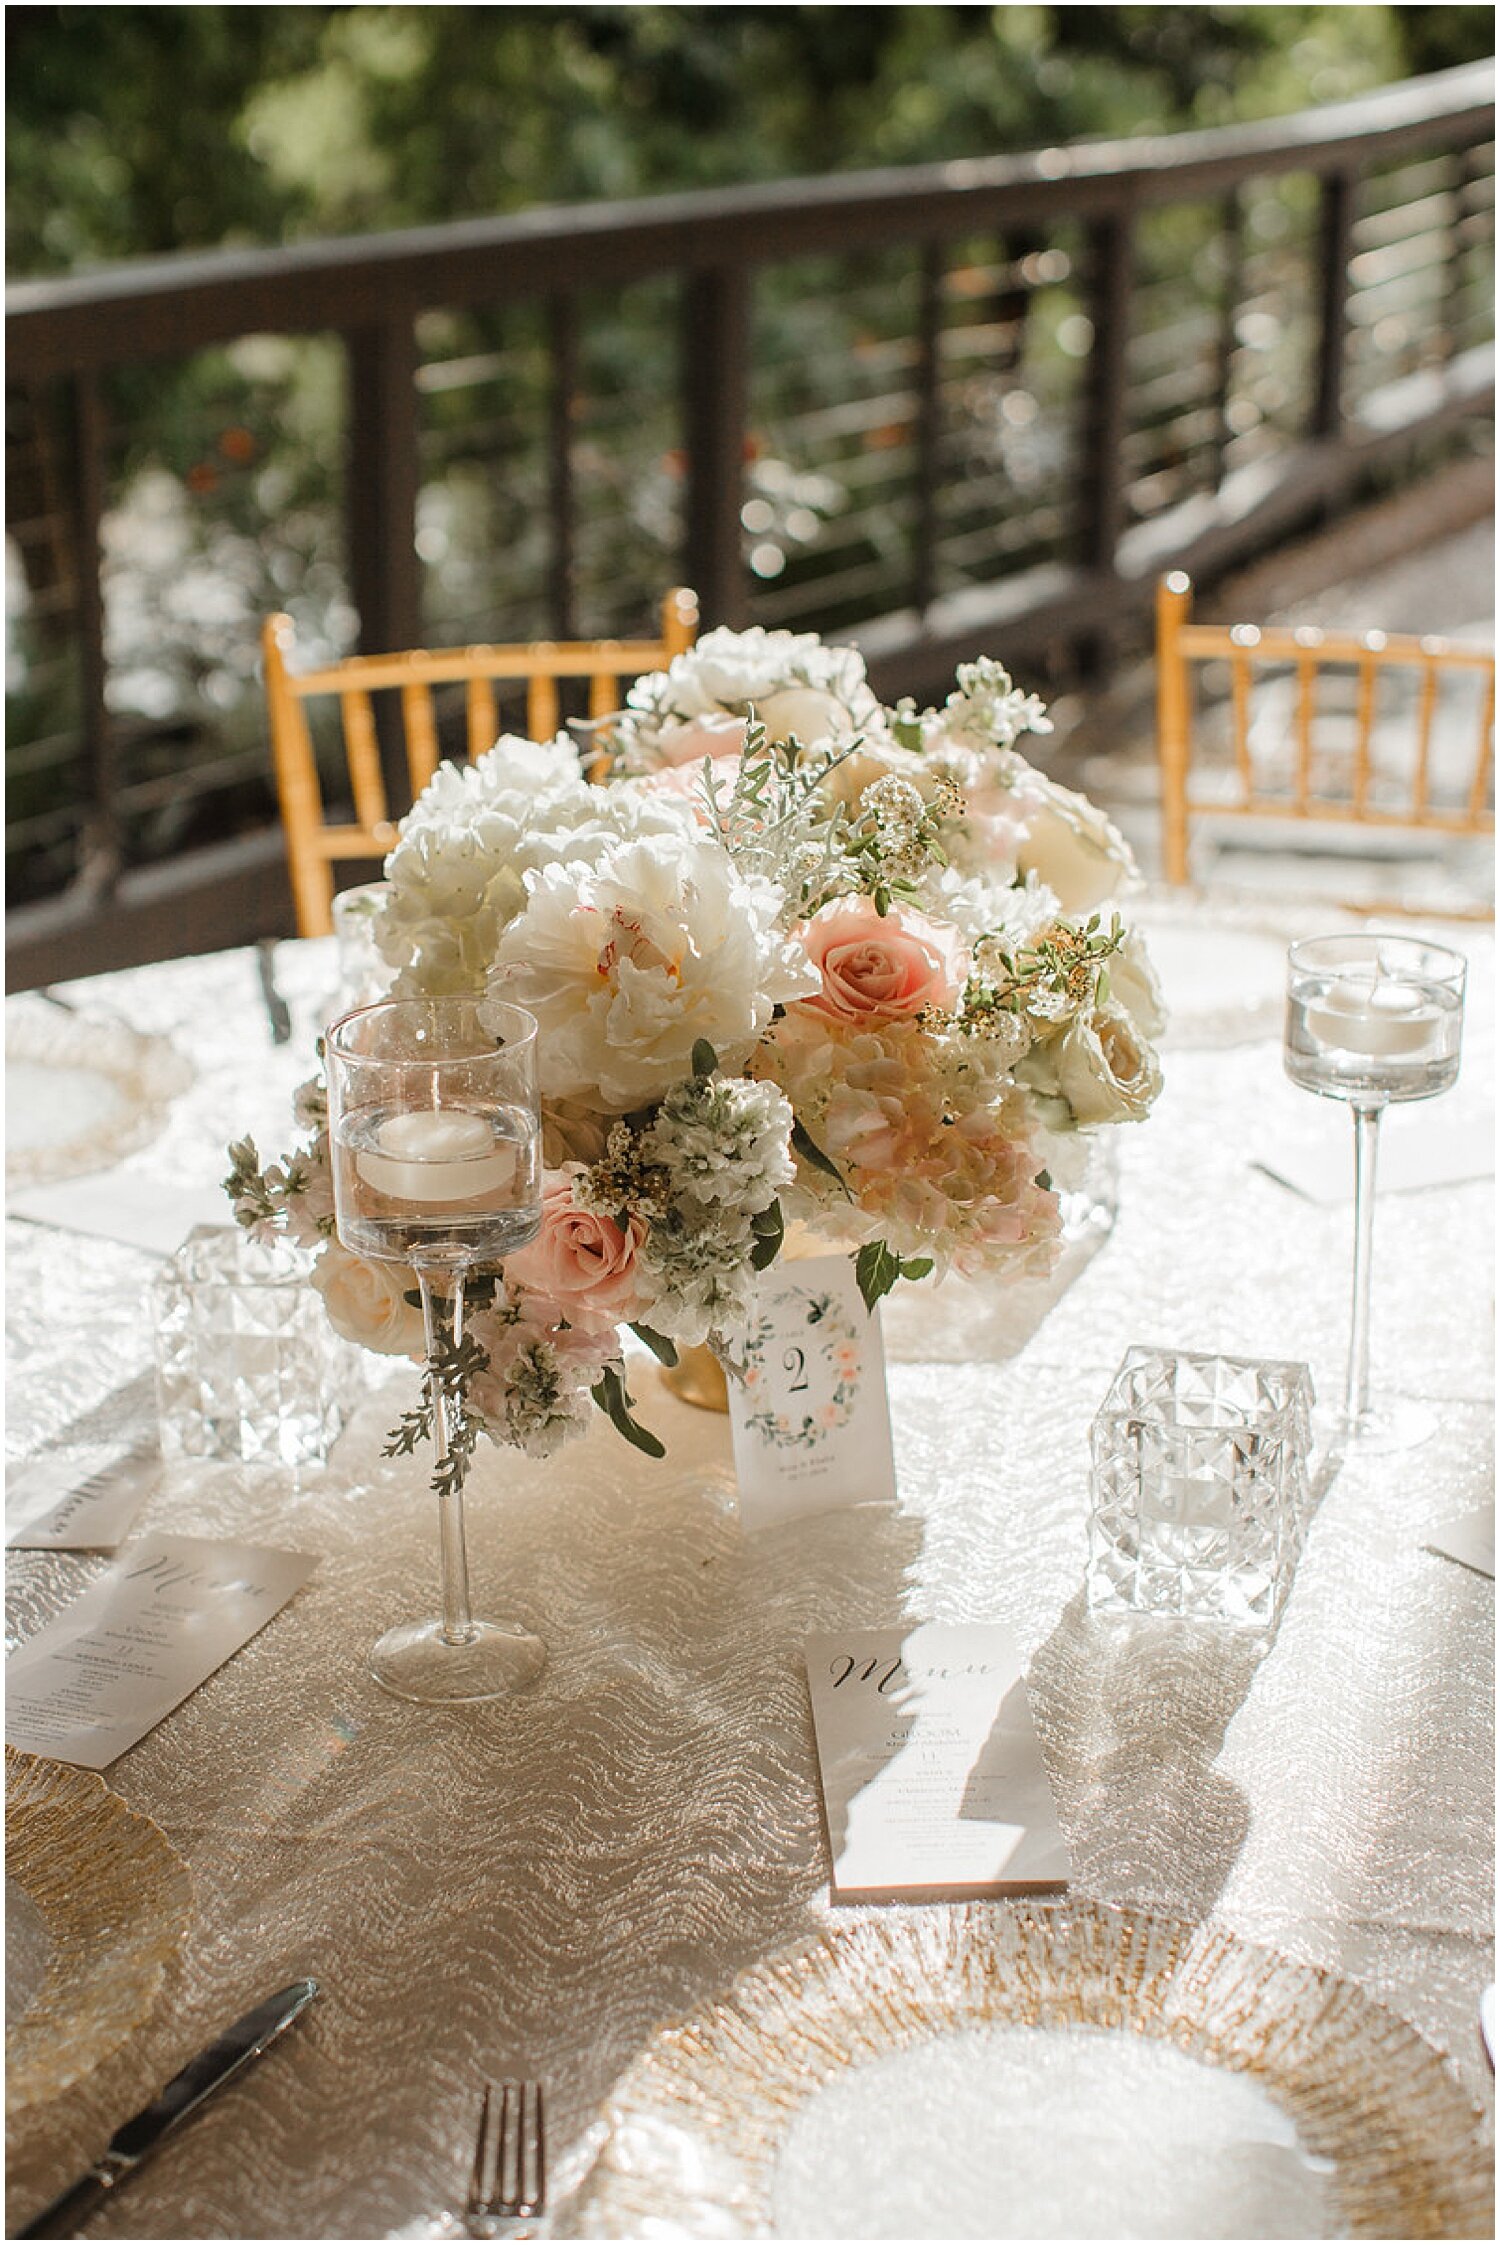  white and peach wedding floral centerpiece 